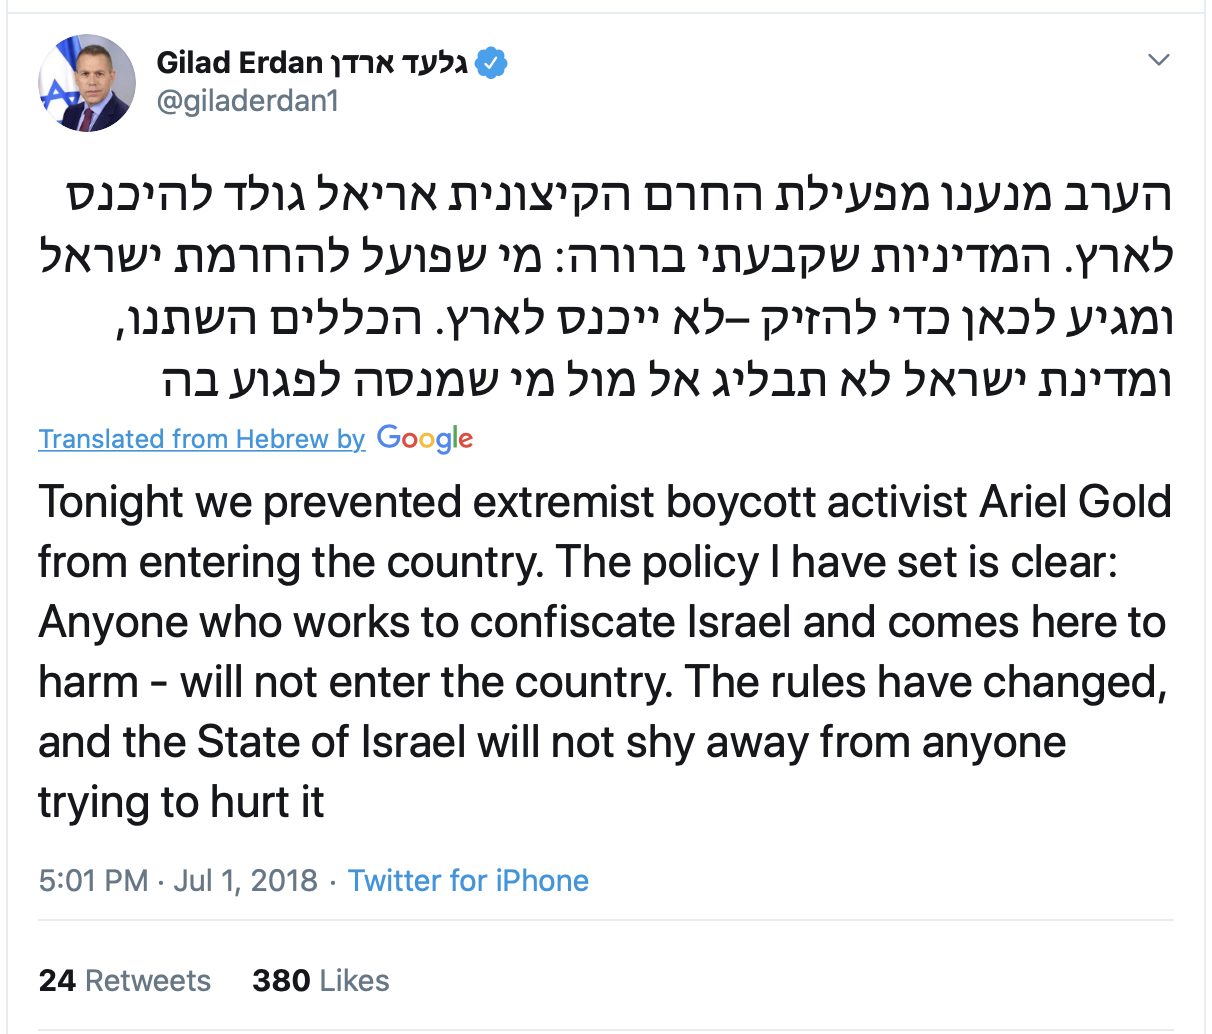 Gilad Erdan tweet